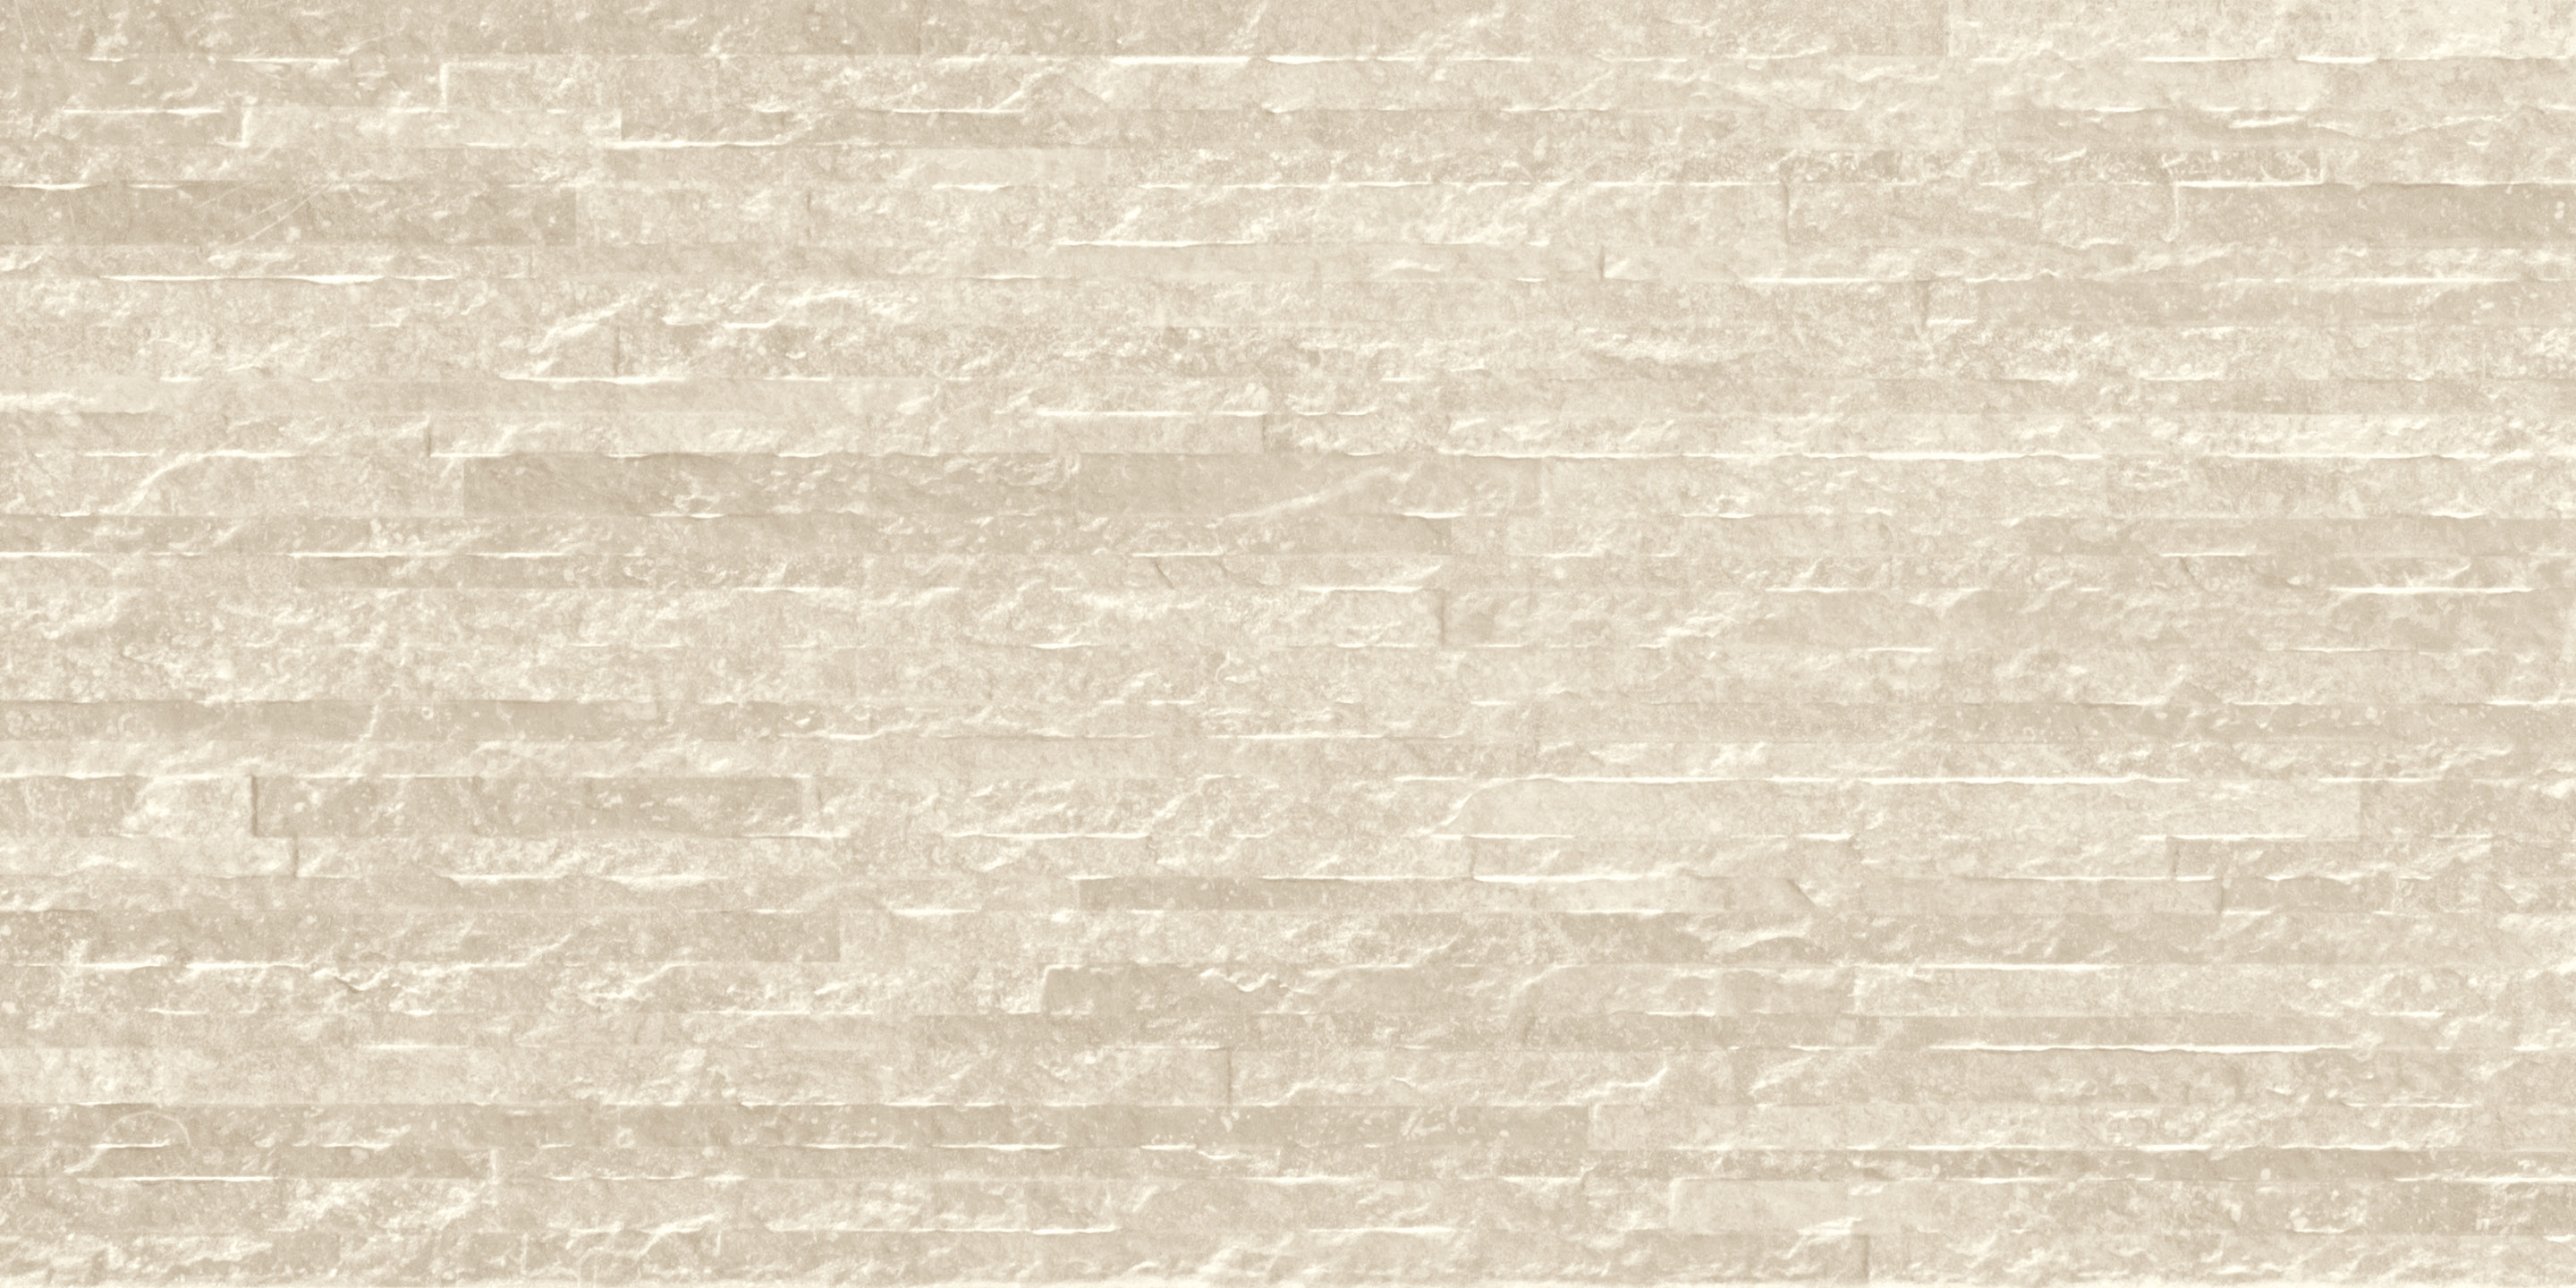 12 x 24 Marwari Clay relief deco rectified porcelain tile (SPECIAL ORDER)